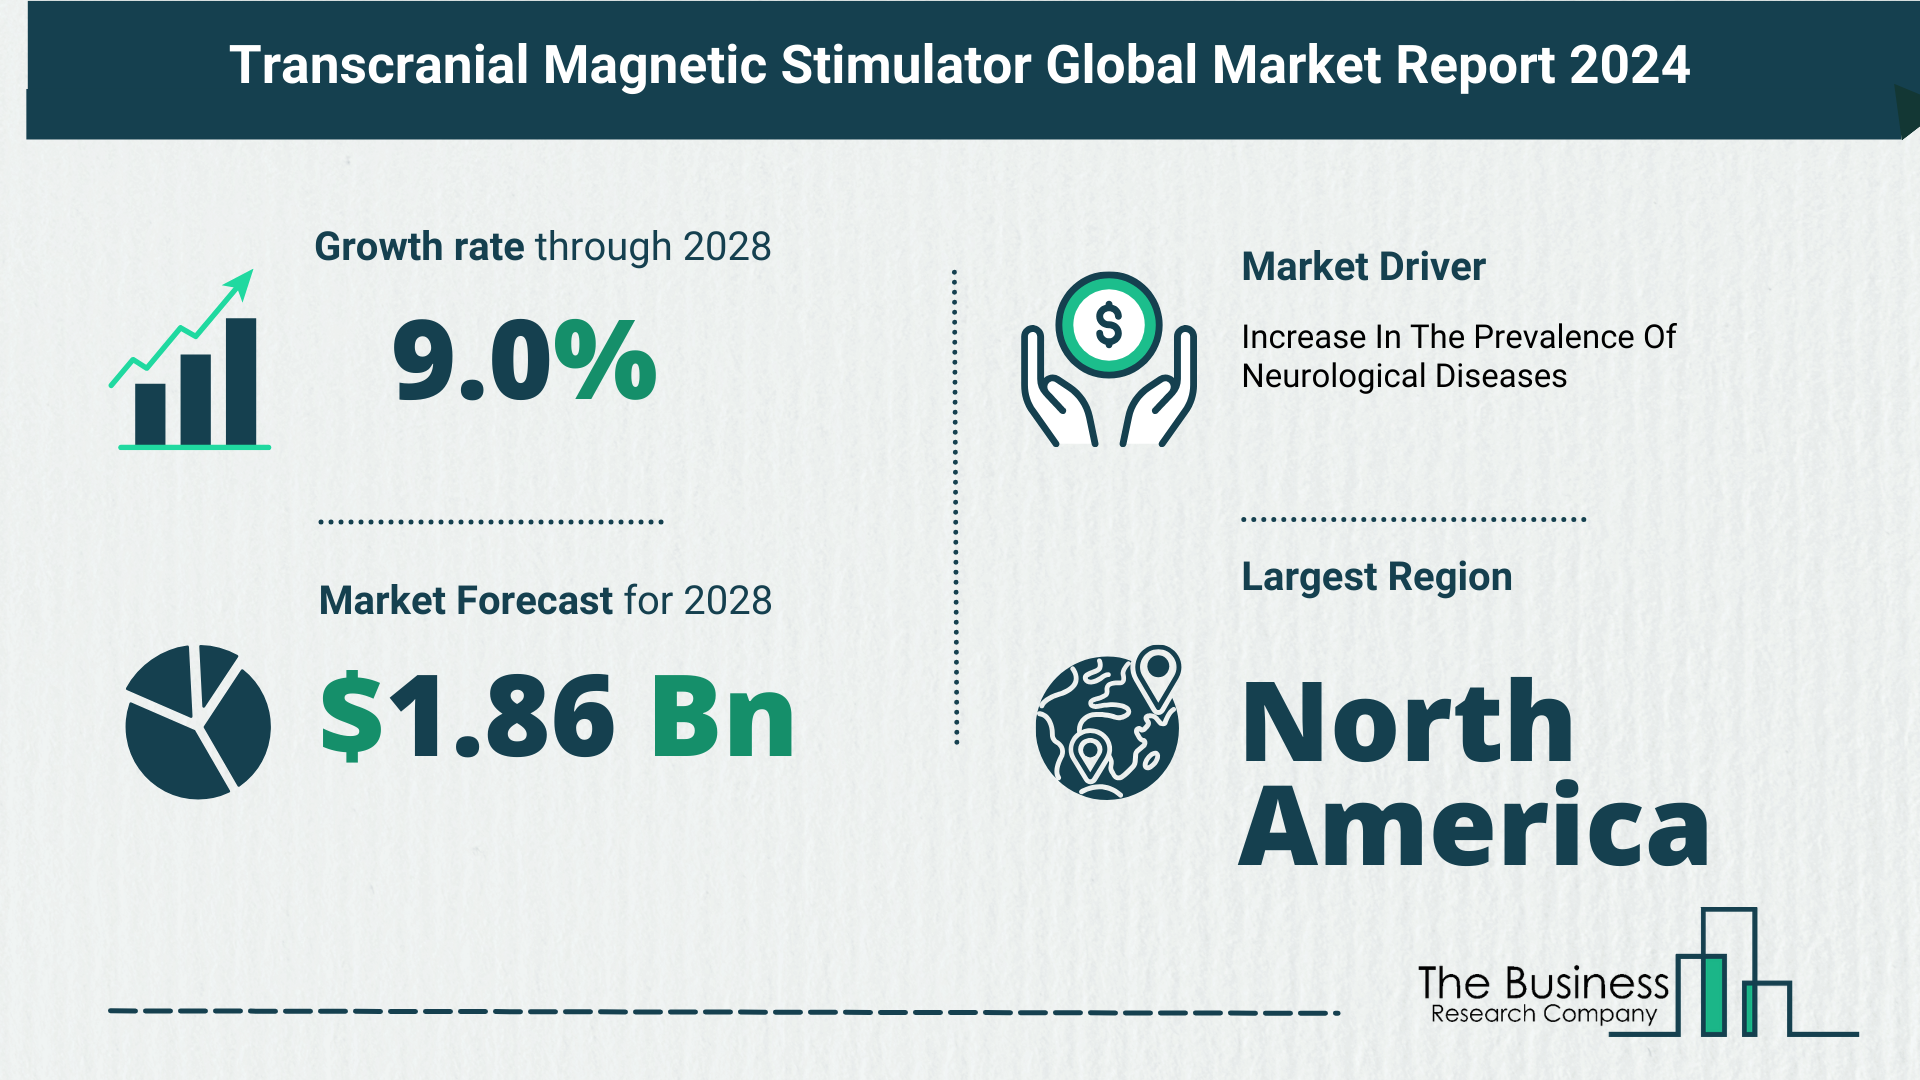 Global Transcranial Magnetic Stimulator Market